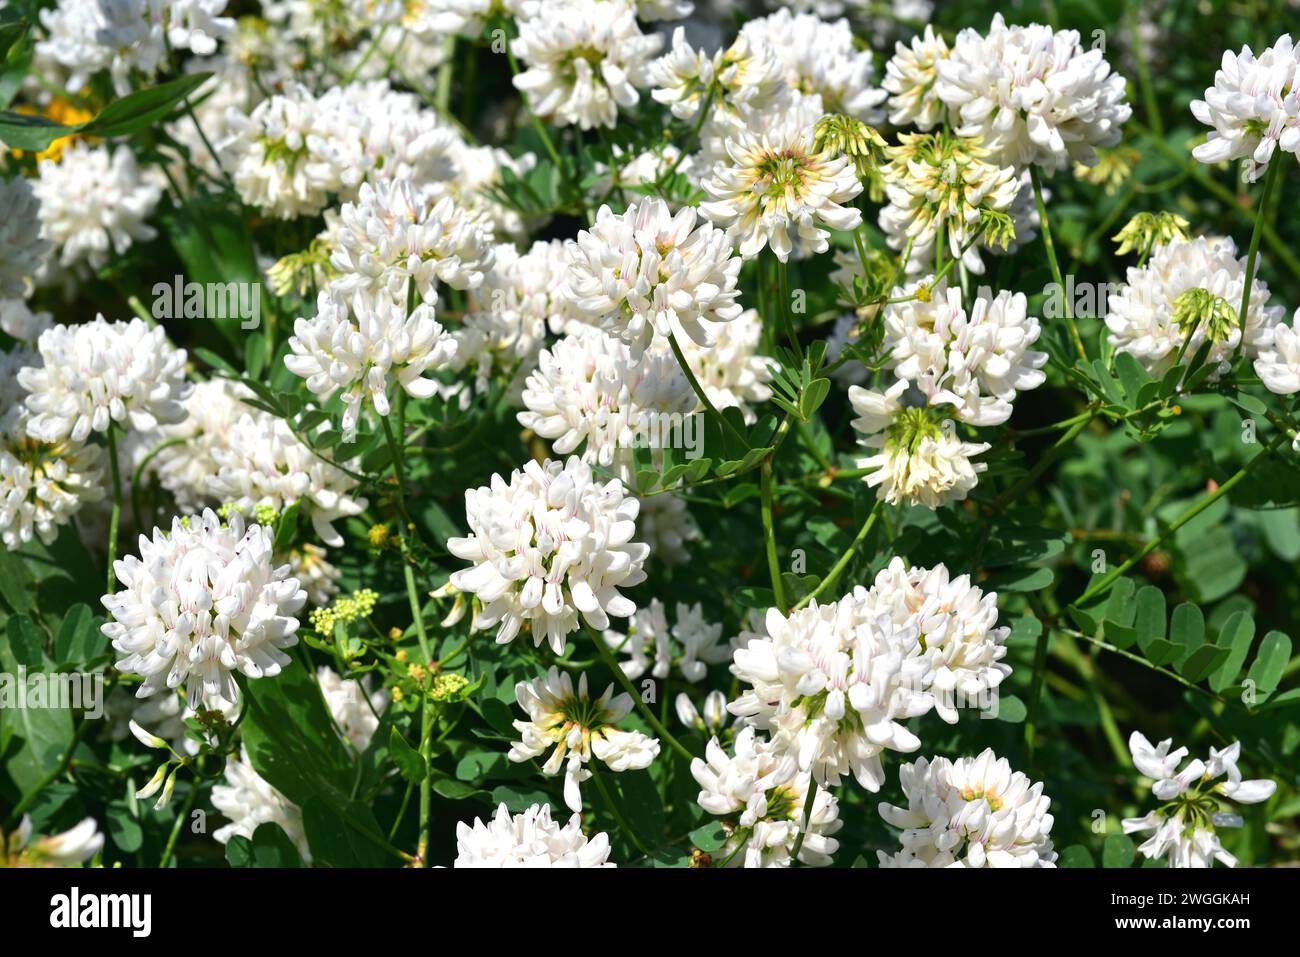 White crownvetch (Coronilla globosa or Securigera globosa) is a perennial shrub native to Crete. Flowering plant. Stock Photo